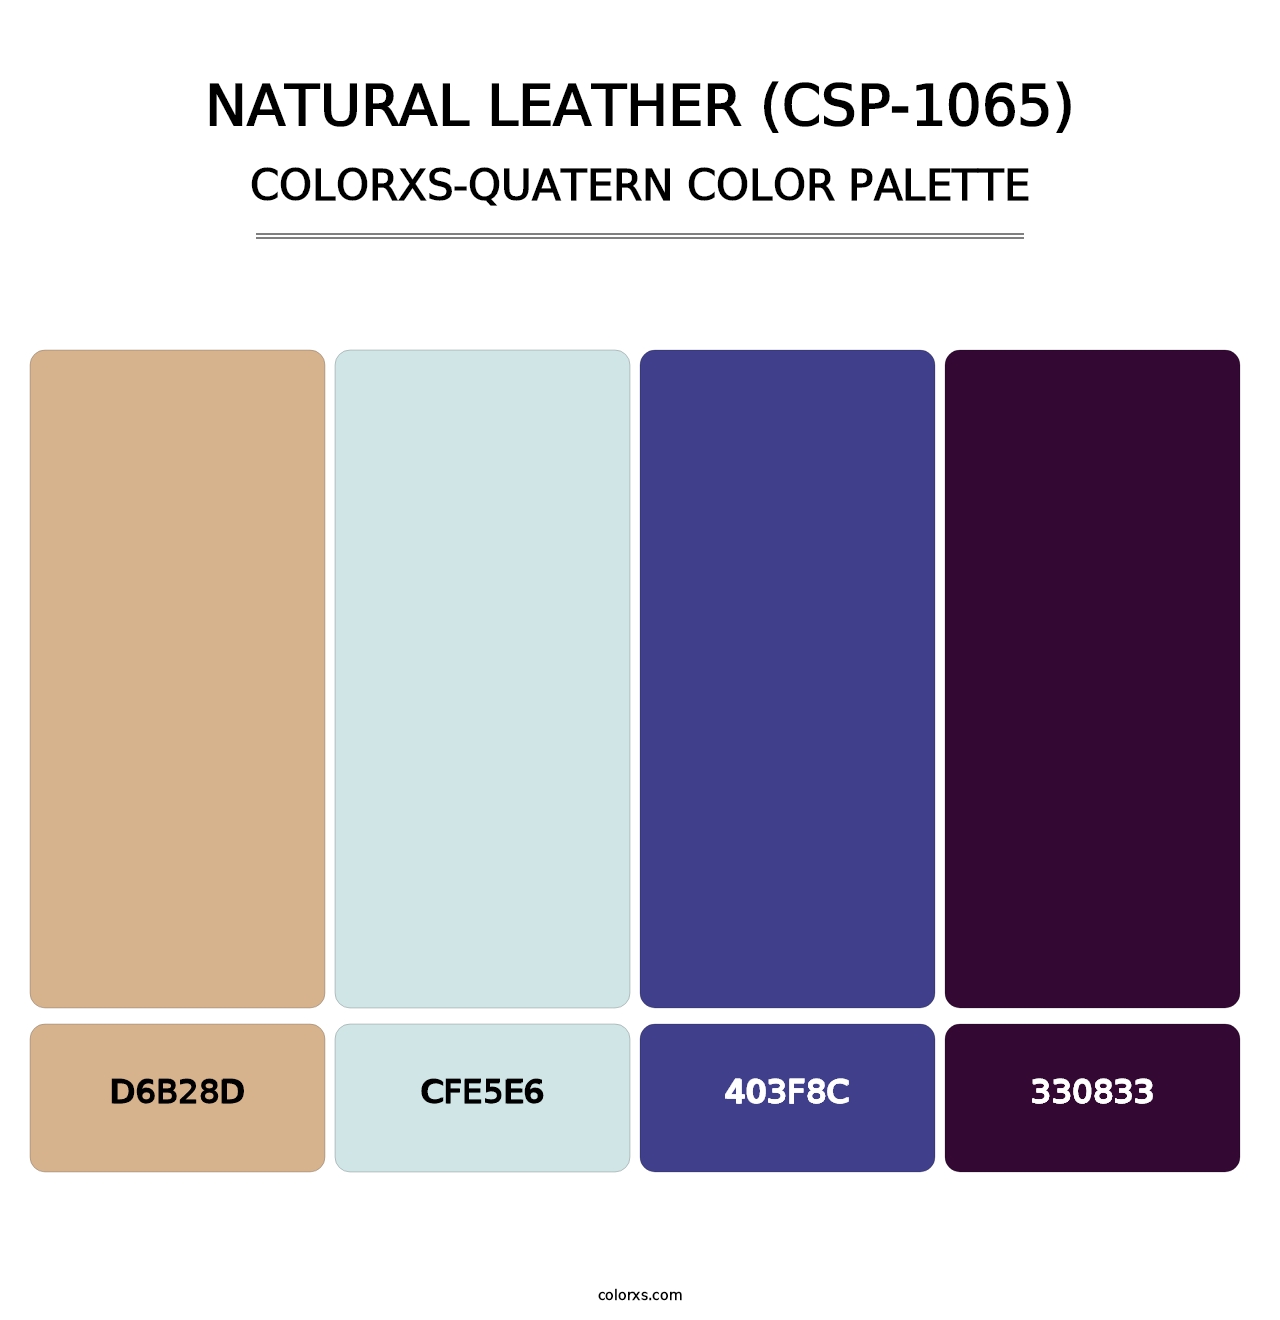 Natural Leather (CSP-1065) - Colorxs Quatern Palette